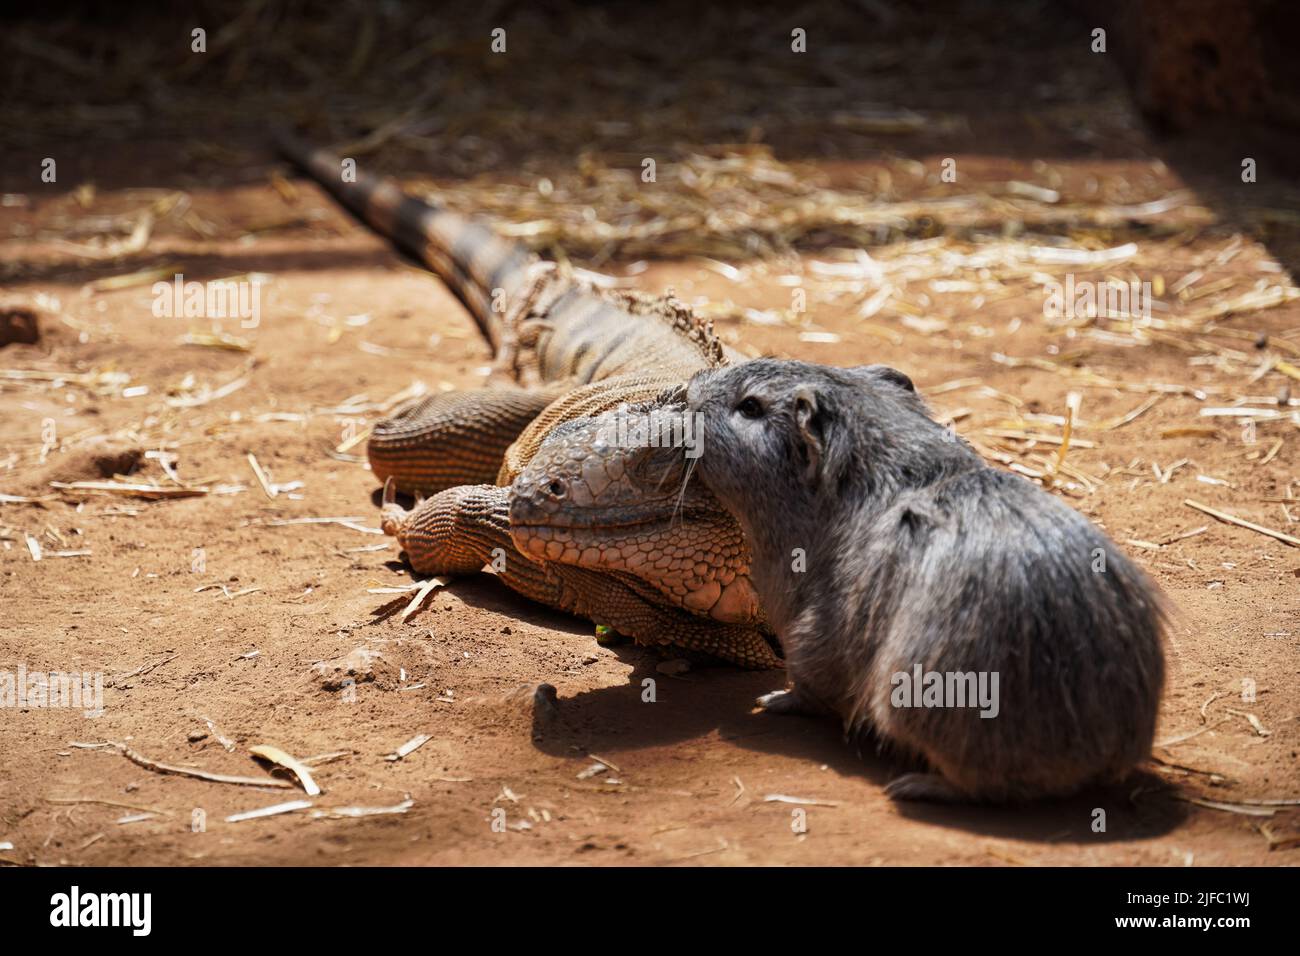 Friendship between iguana and guinea pig, Tenerife, Spain, Europe Stock Photo